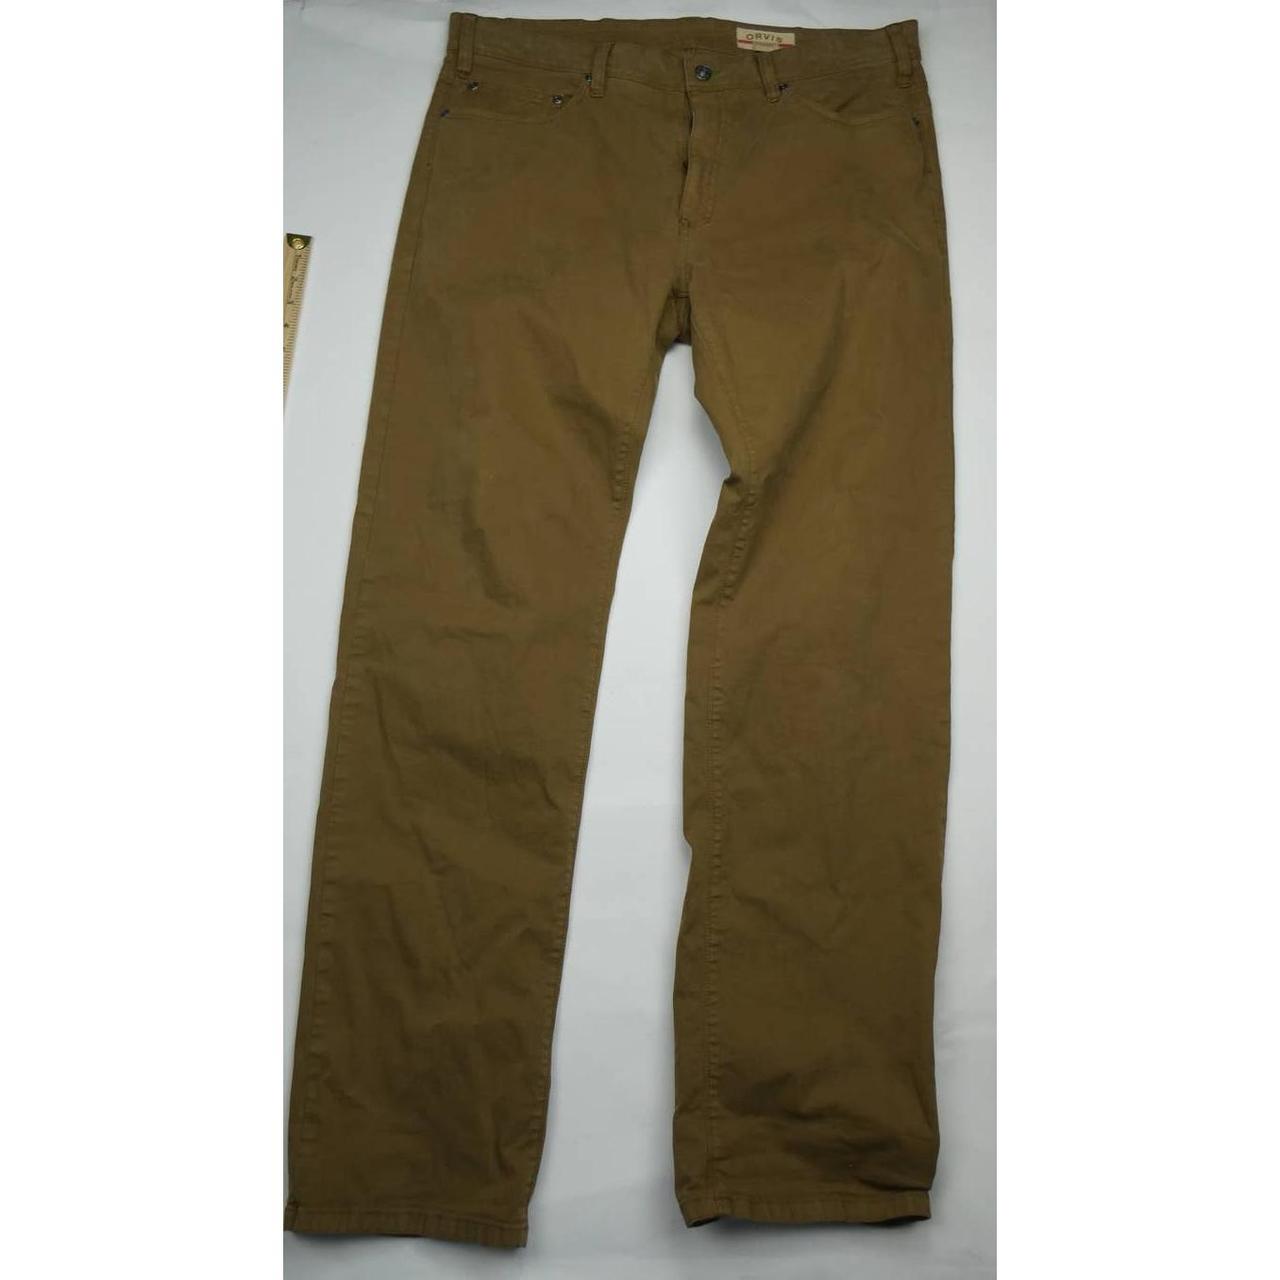 Orvis heavyweight pants, excellent condition. Size - Depop